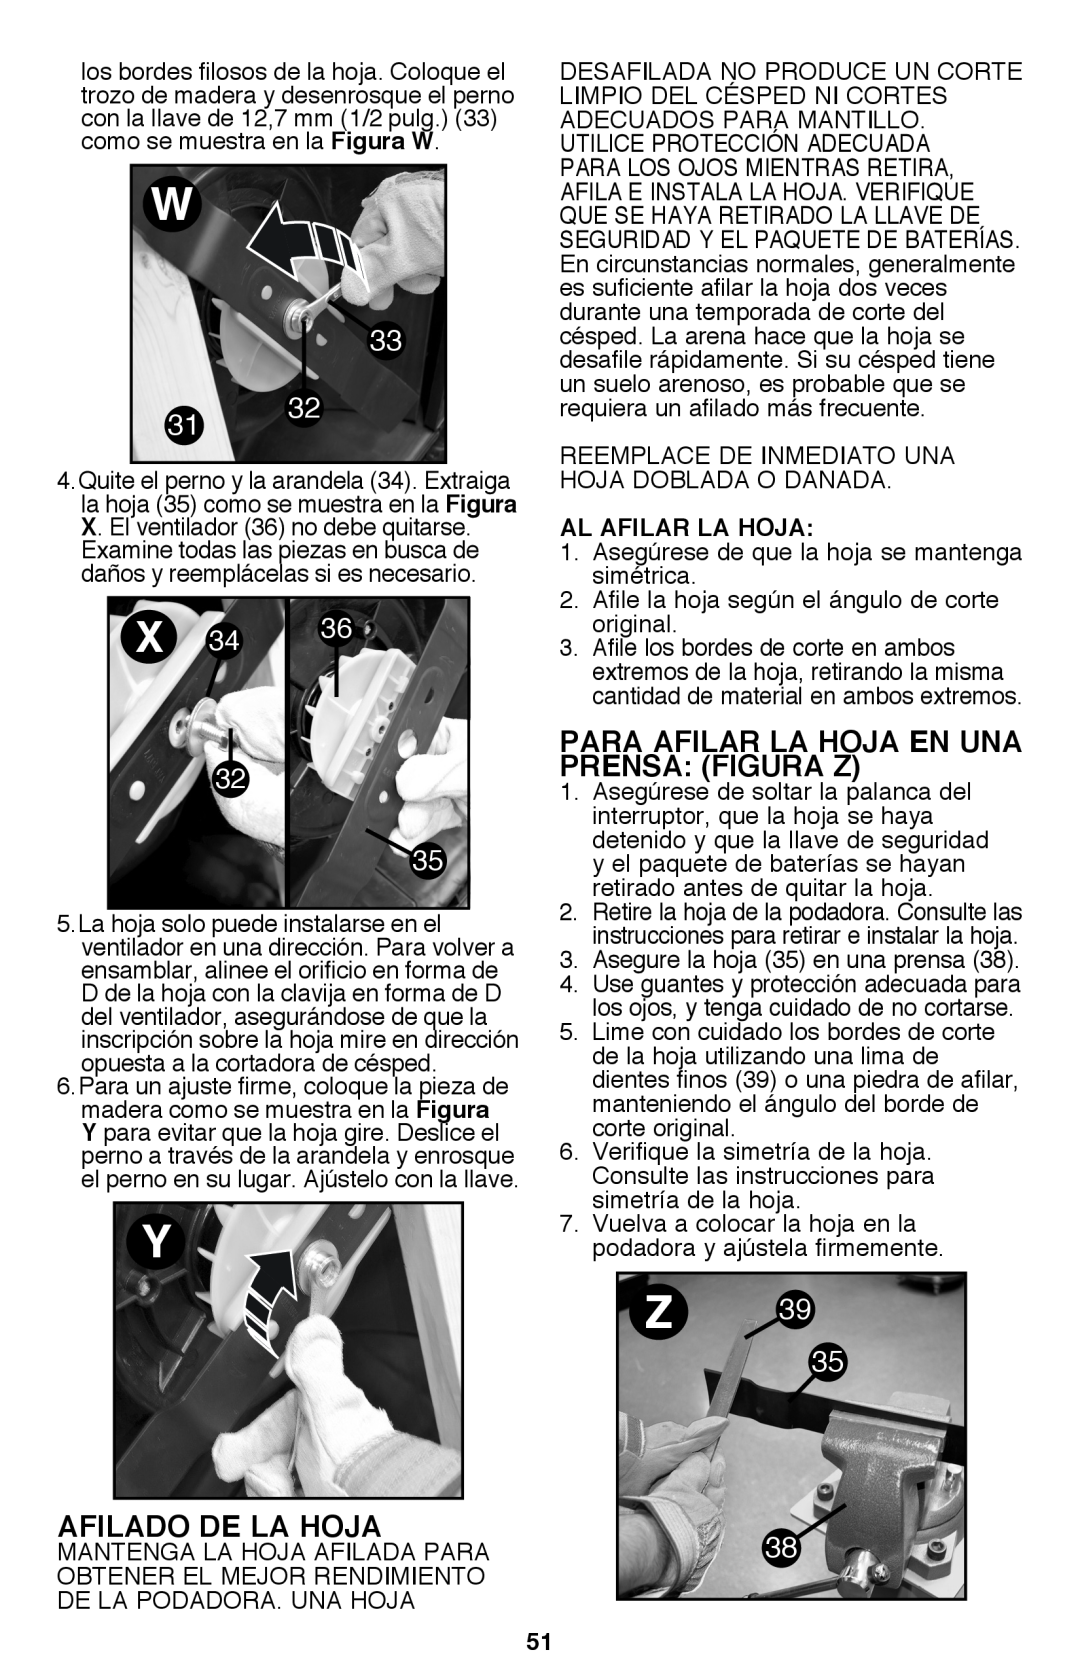 Black & Decker CM2040 instruction manual Para Afilar La Hoja En Una Prensa Figura Z, X 34, Z 39, Al Afilar La Hoja 